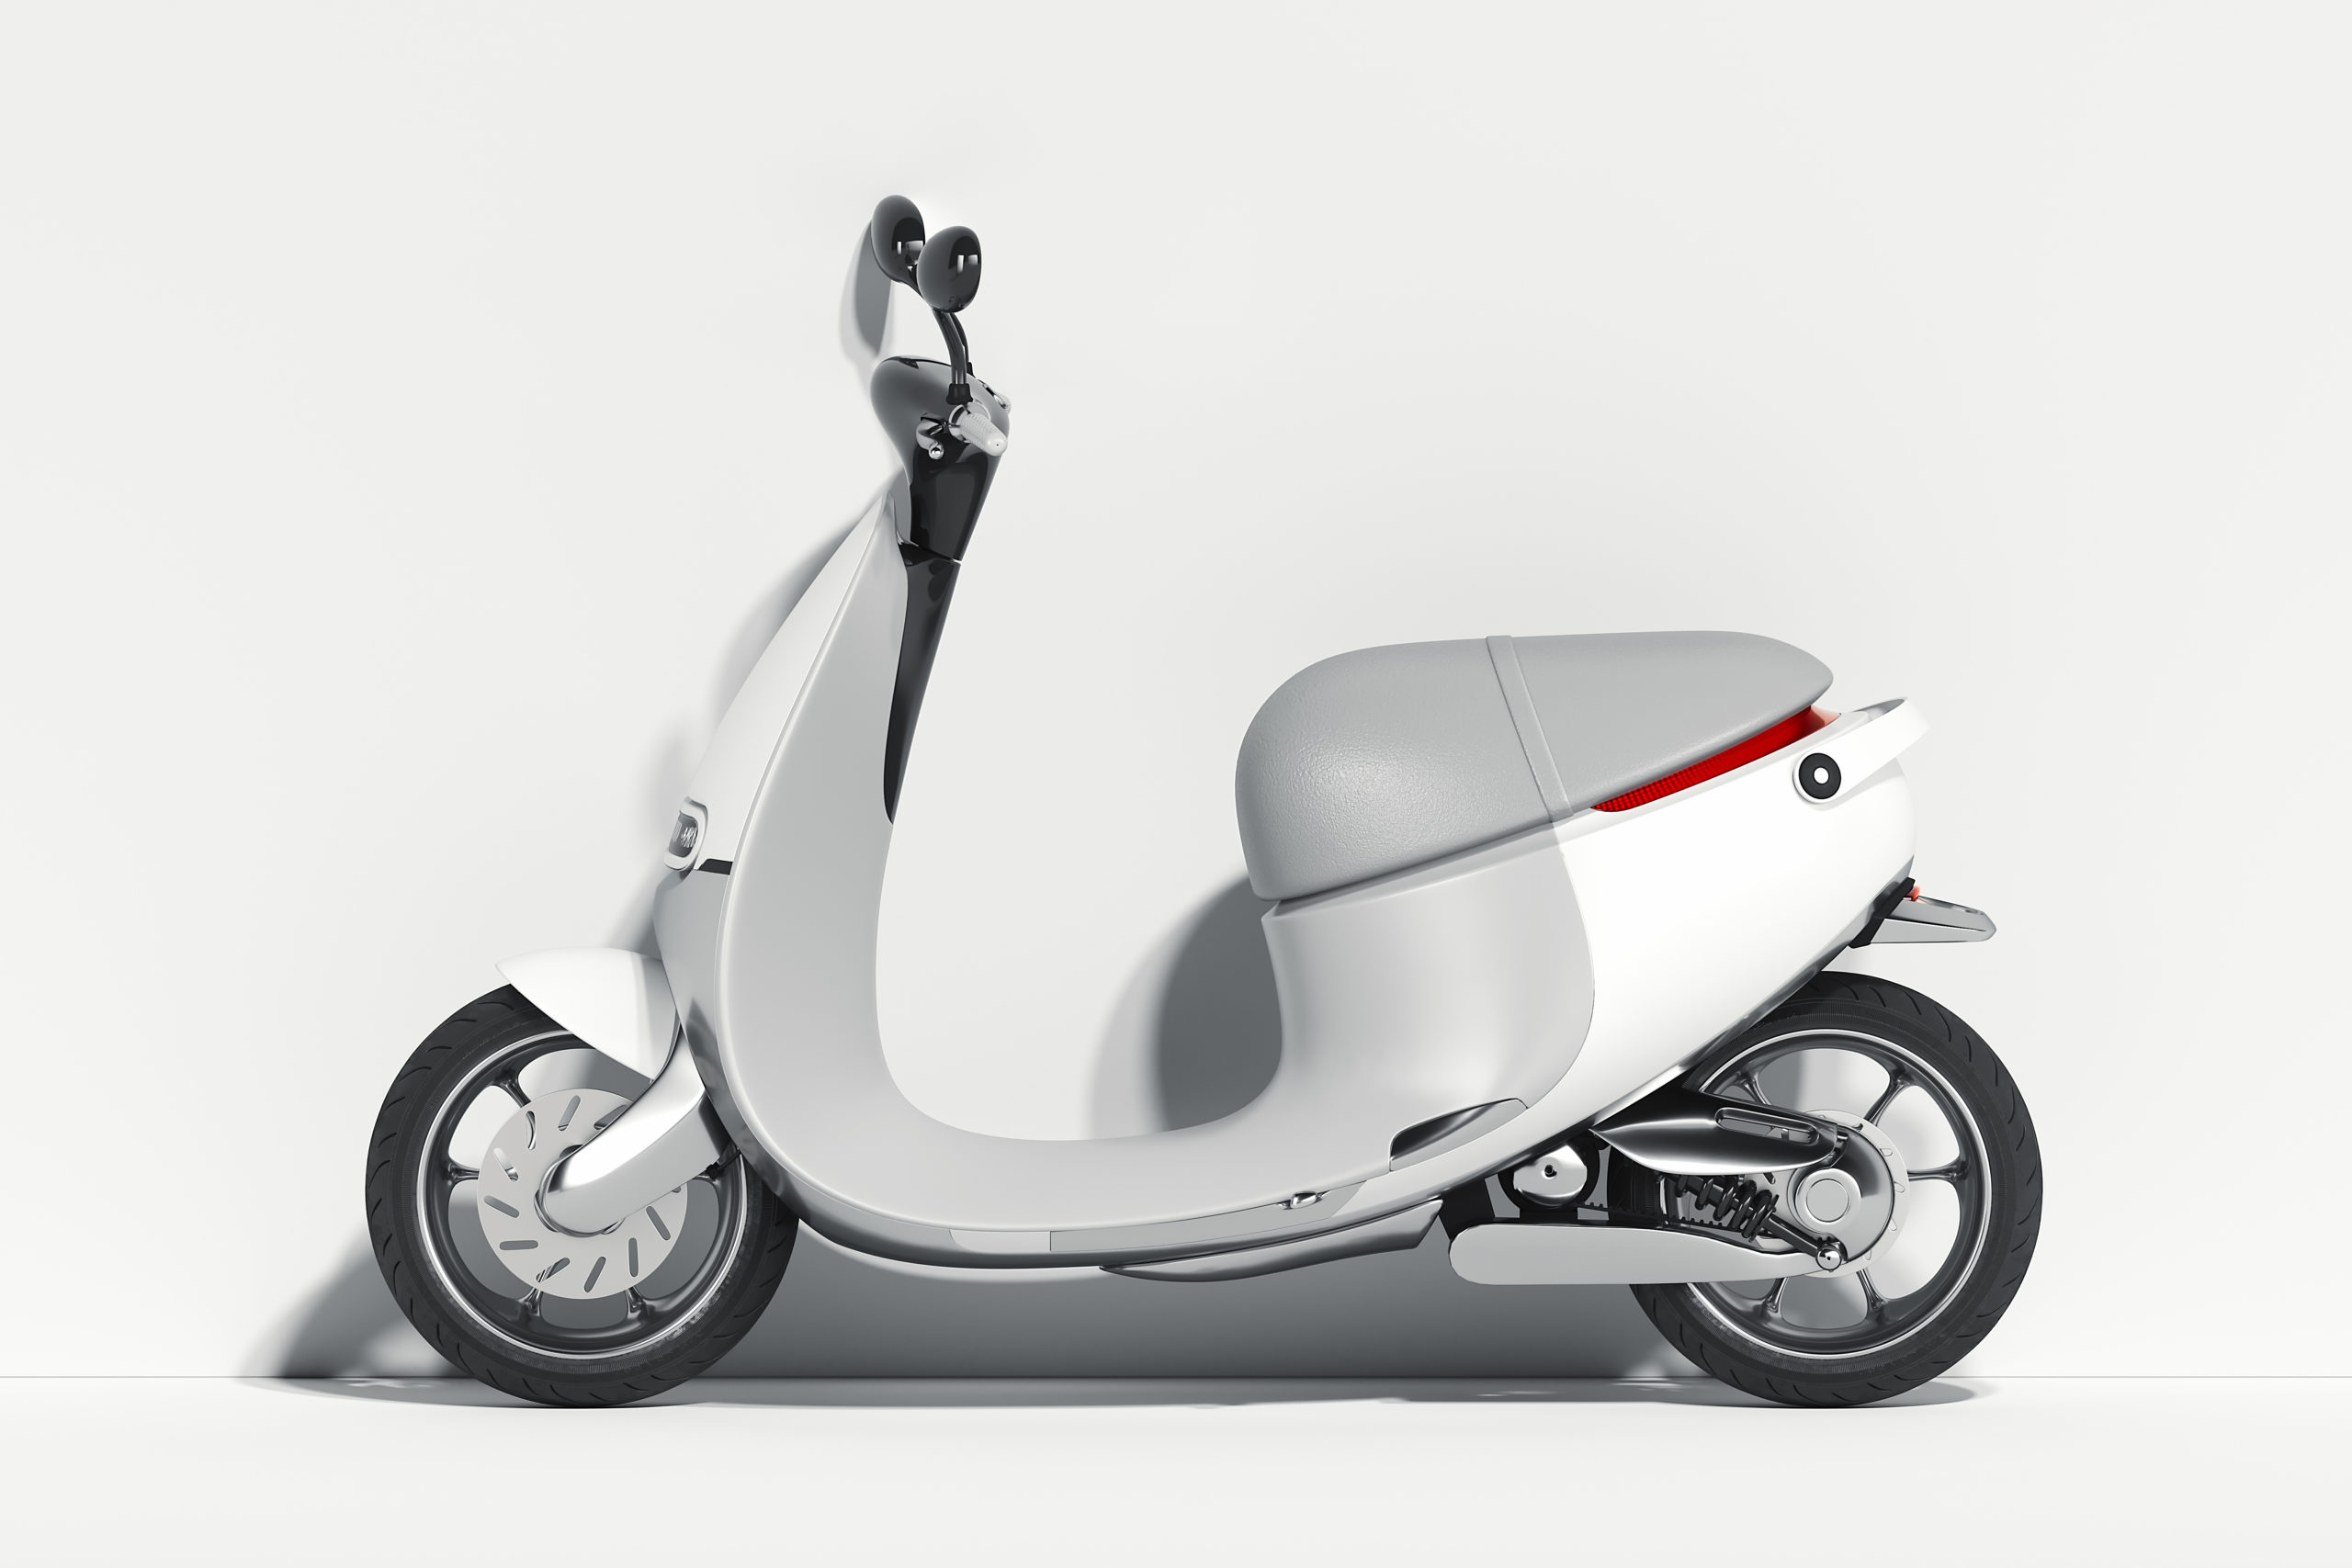 Garantie Vol - Assurance moto 50cc et scooter Discount